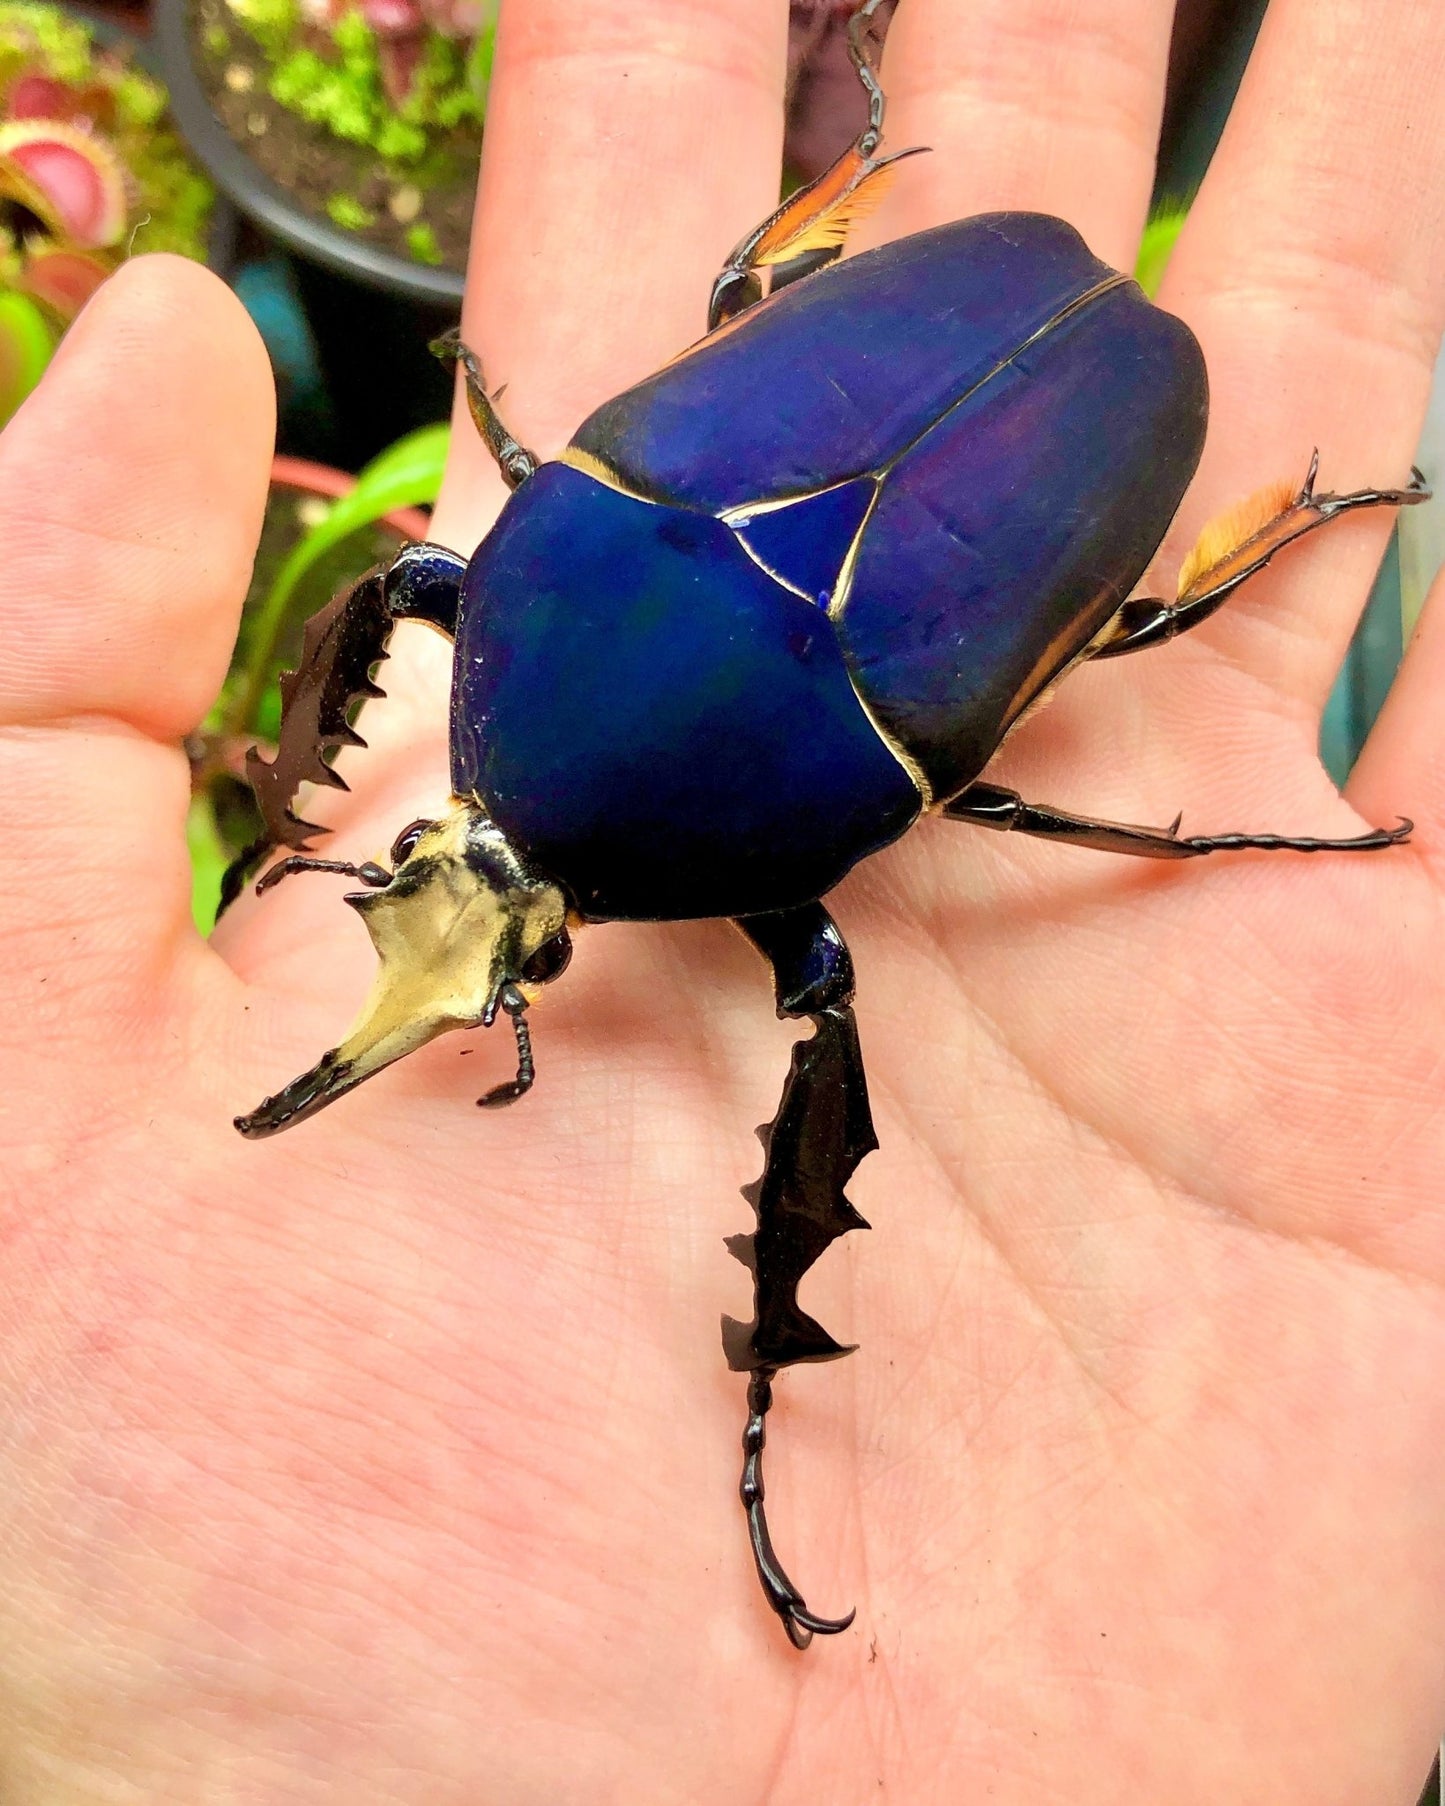 Larvae - "Pure Blue" Giant Flower Beetle, (Mecynorrhina ugandensis) - Richard’s Inverts